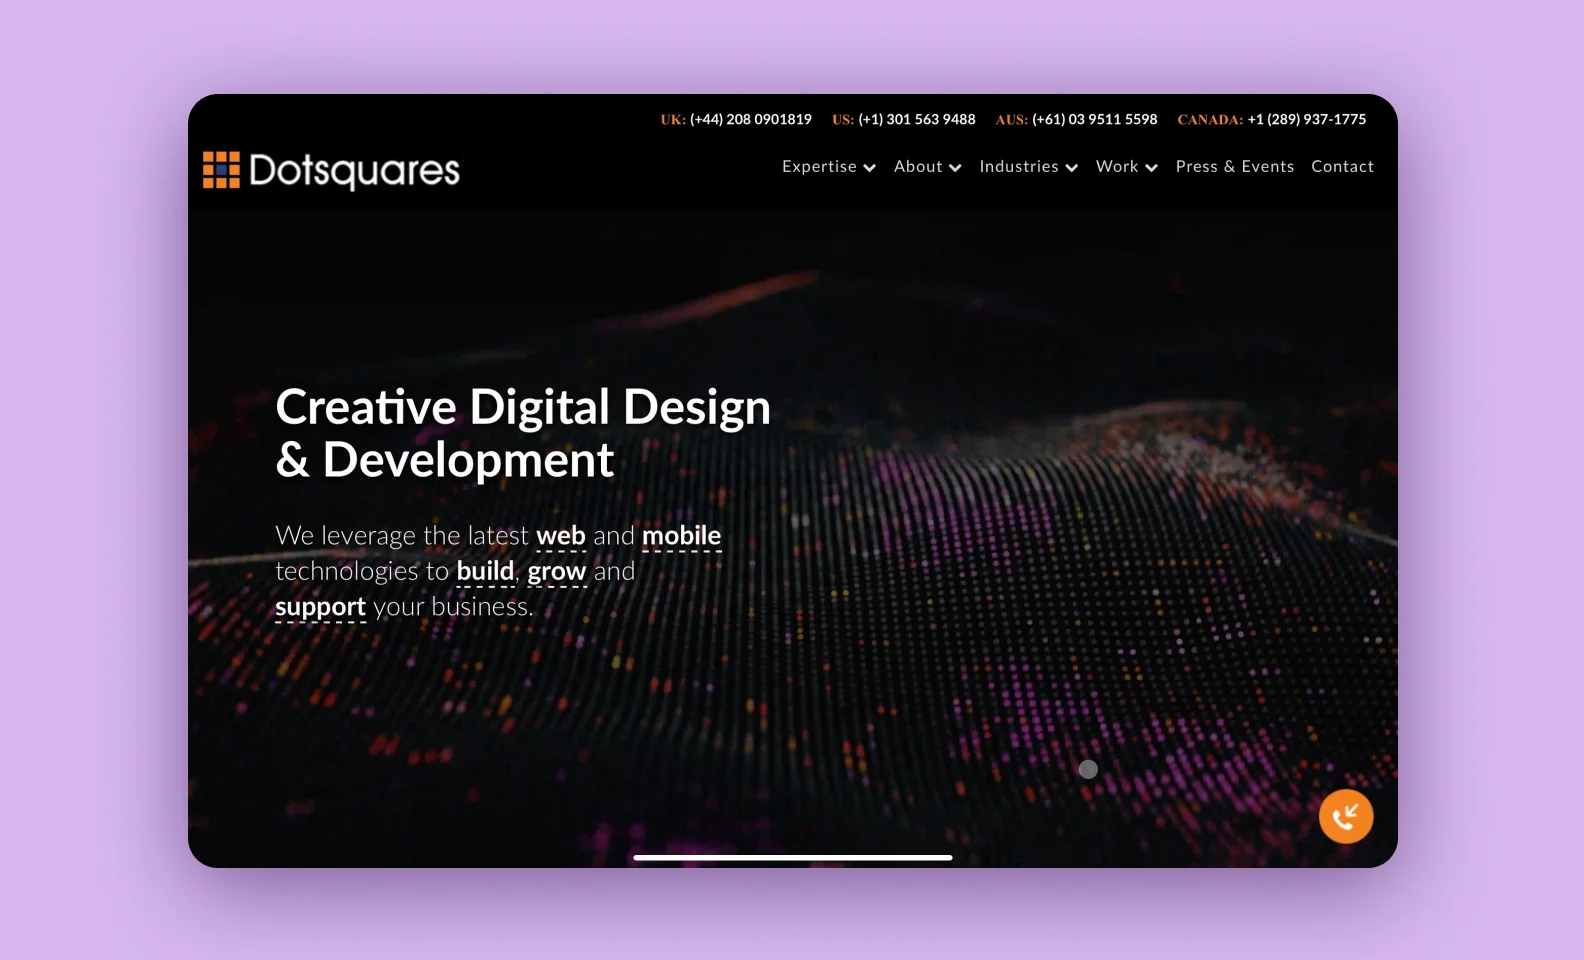 Dotsquares software outsourcing company